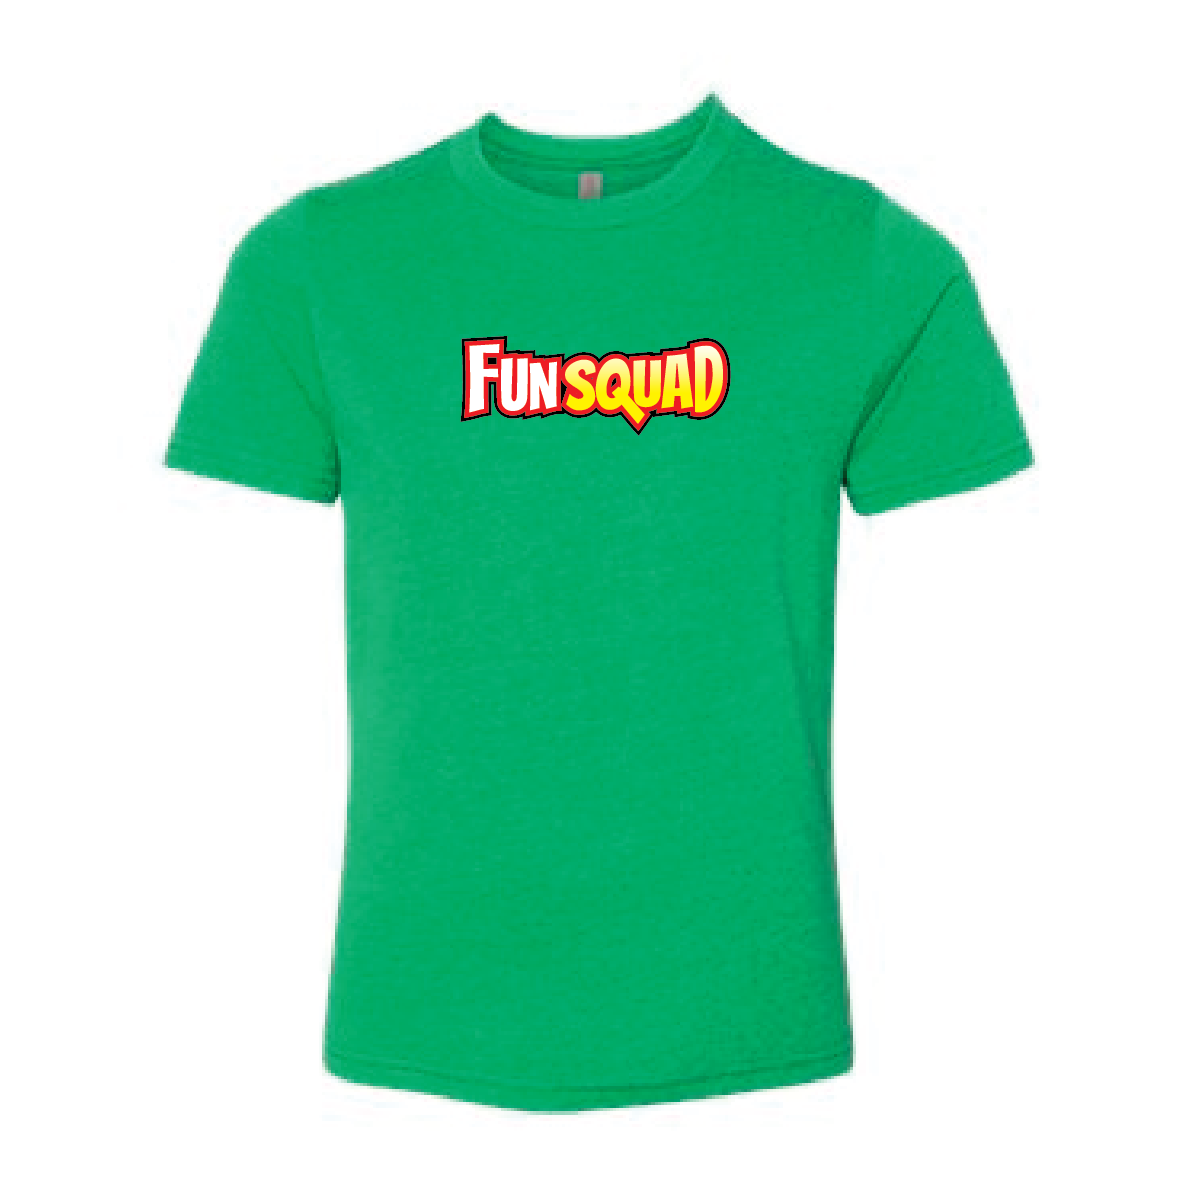 T-shirt Classic - Fun Squad Red